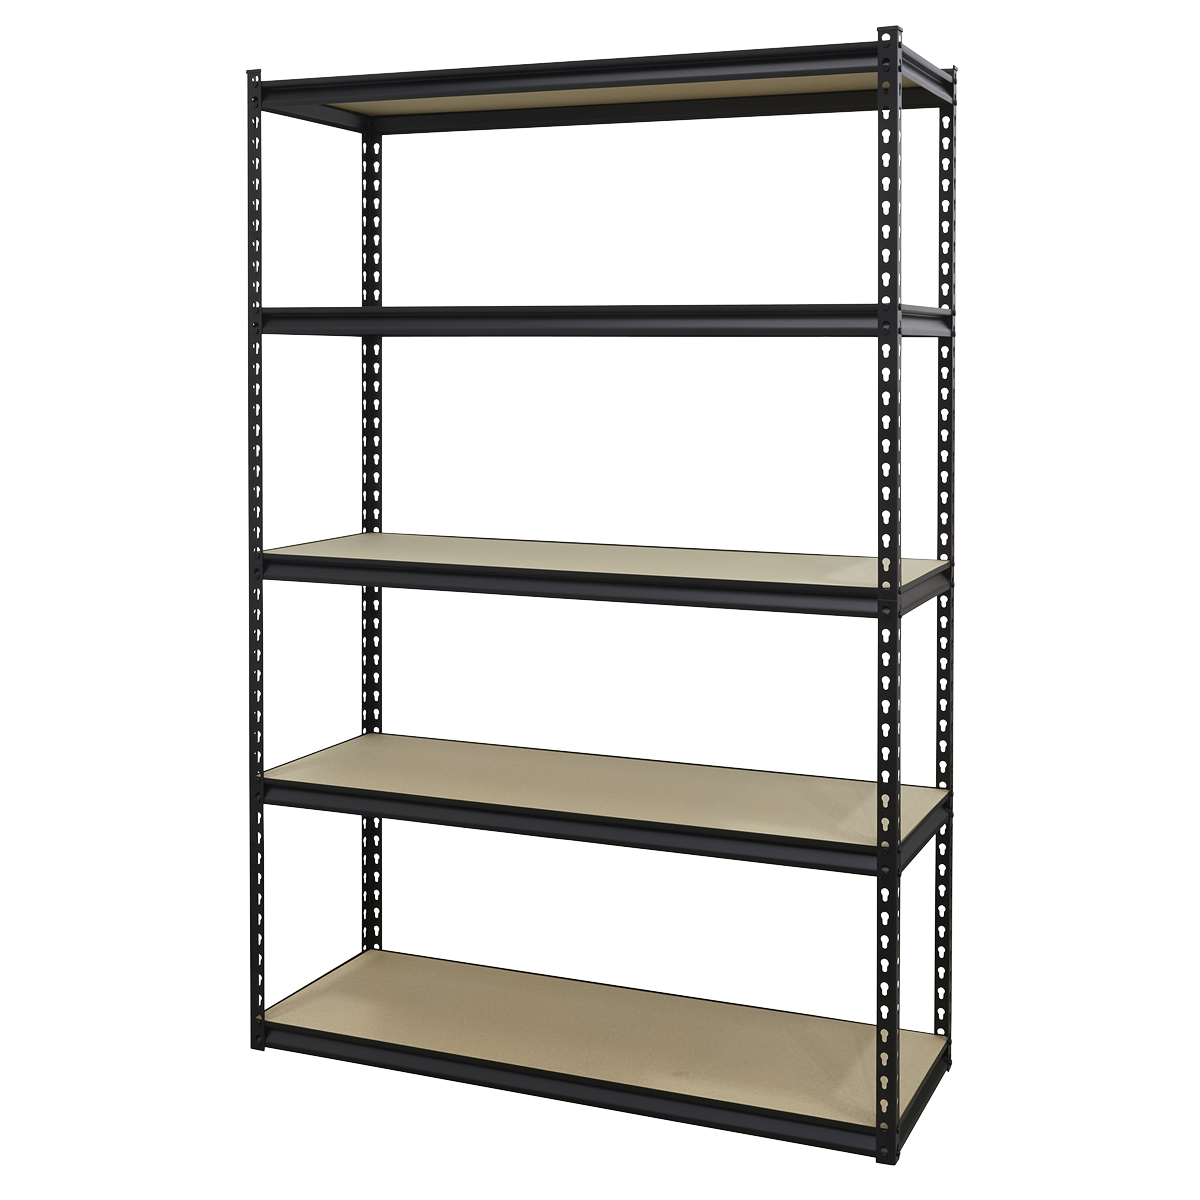 Racking Unit with 5 Shelves 220kg Capacity Per Level